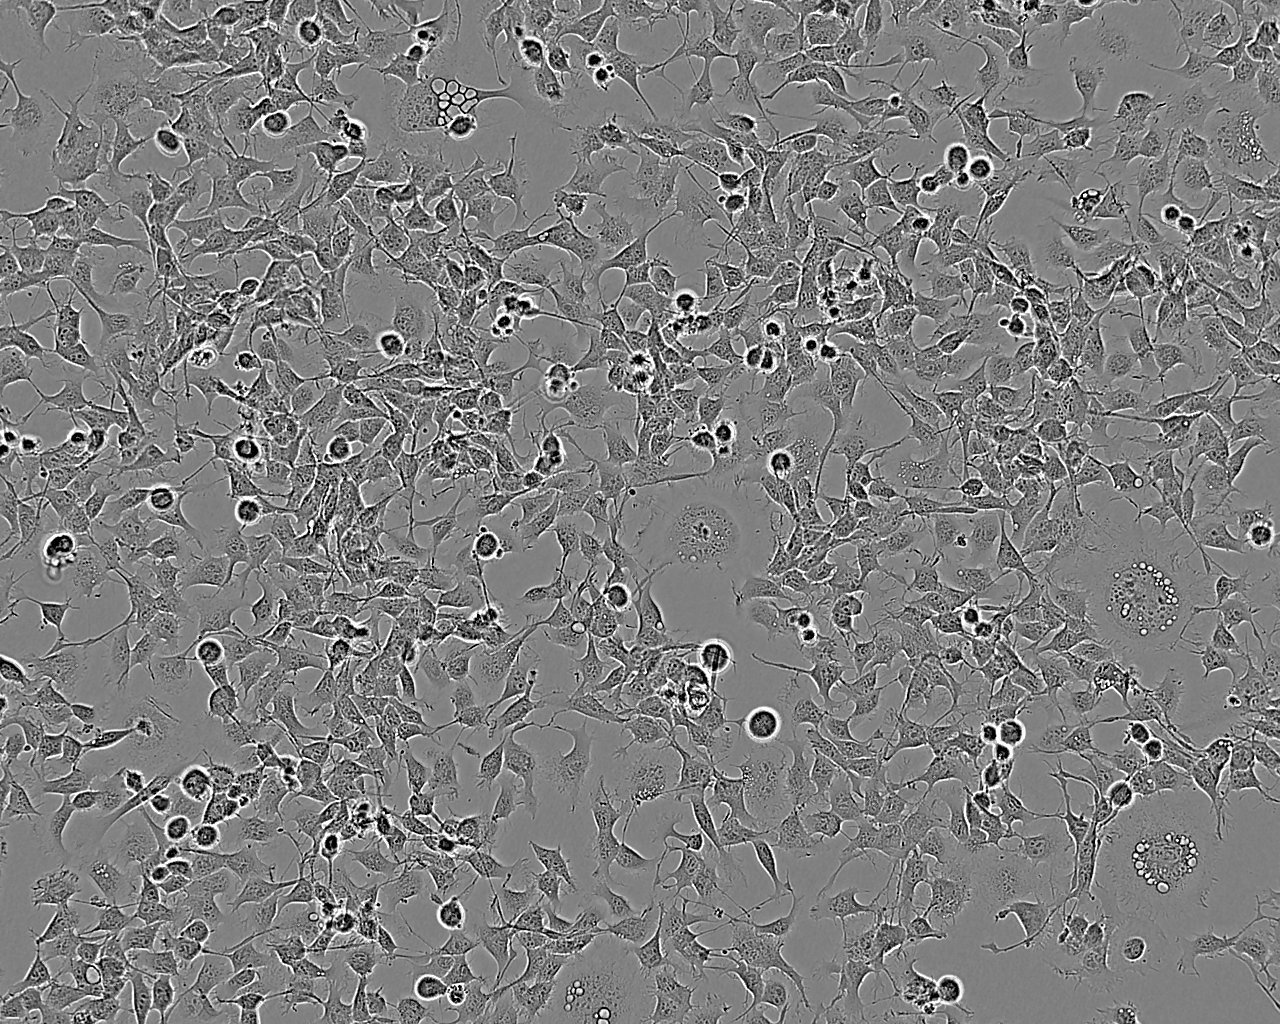 H19-7 Cell:大鼠海马神经元细胞系,H19-7 Cell